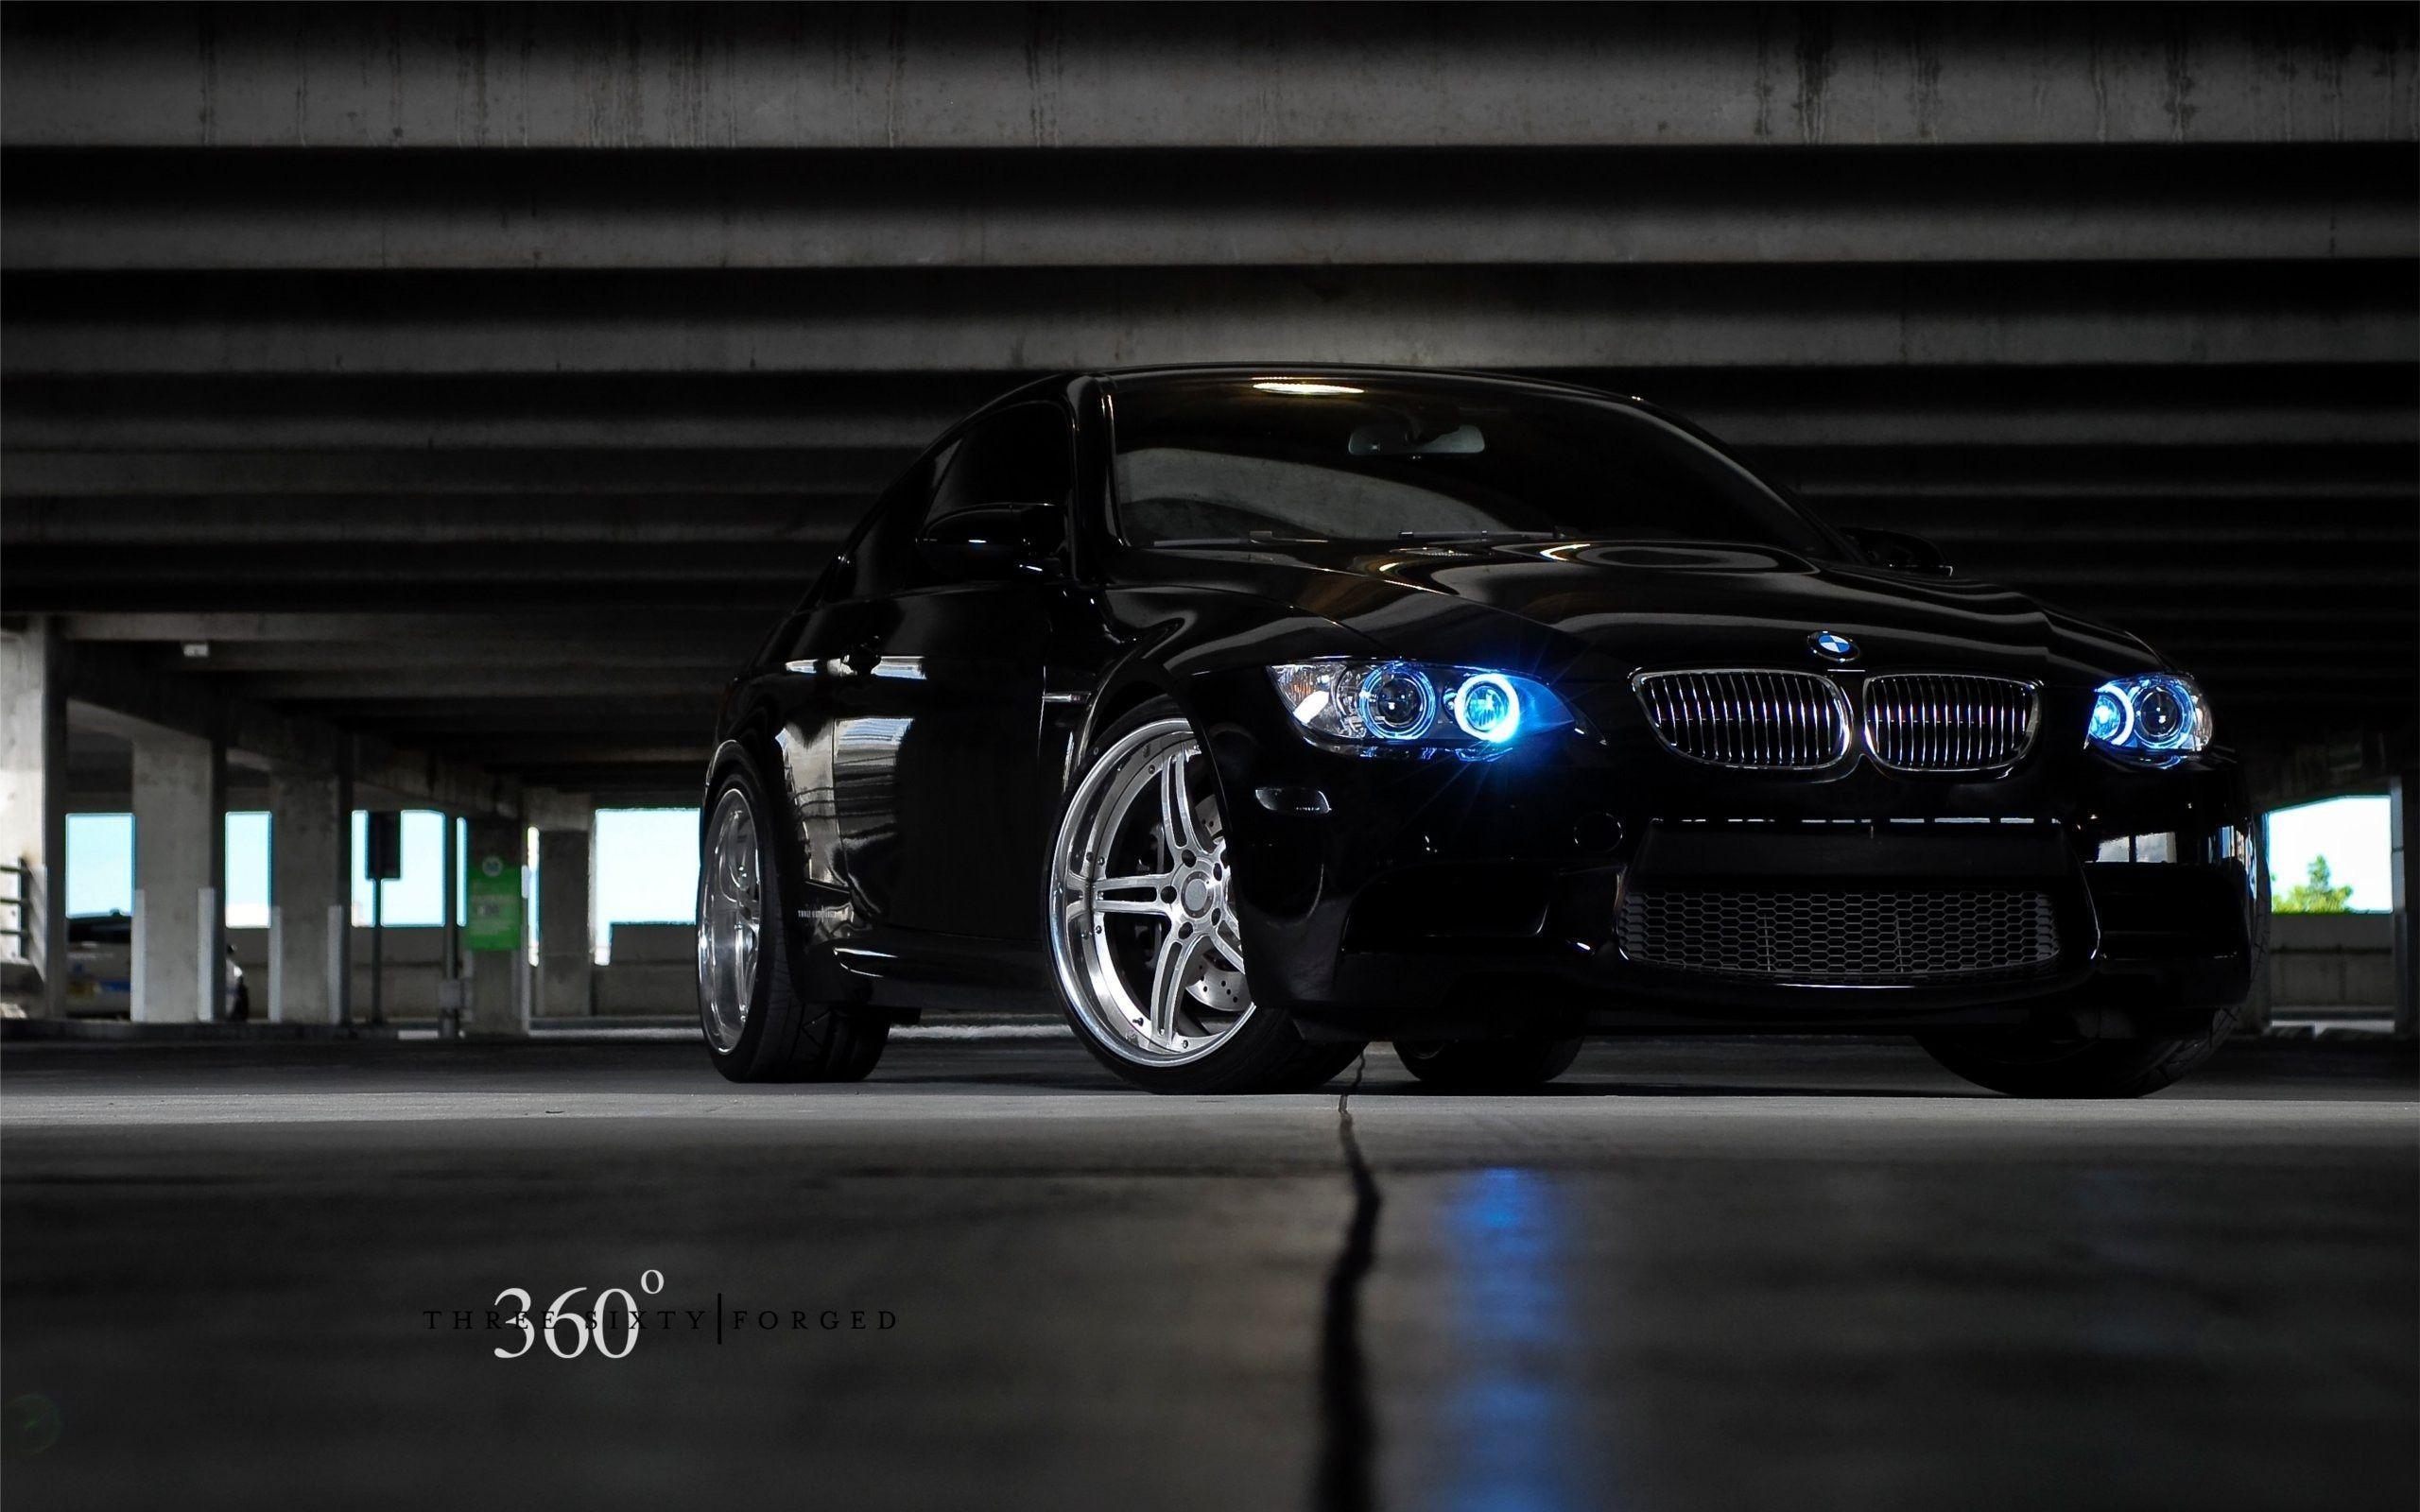 BLACK BMW WALLPAPER 48 142059 Image HD Wallpaper. Wallfoy.com